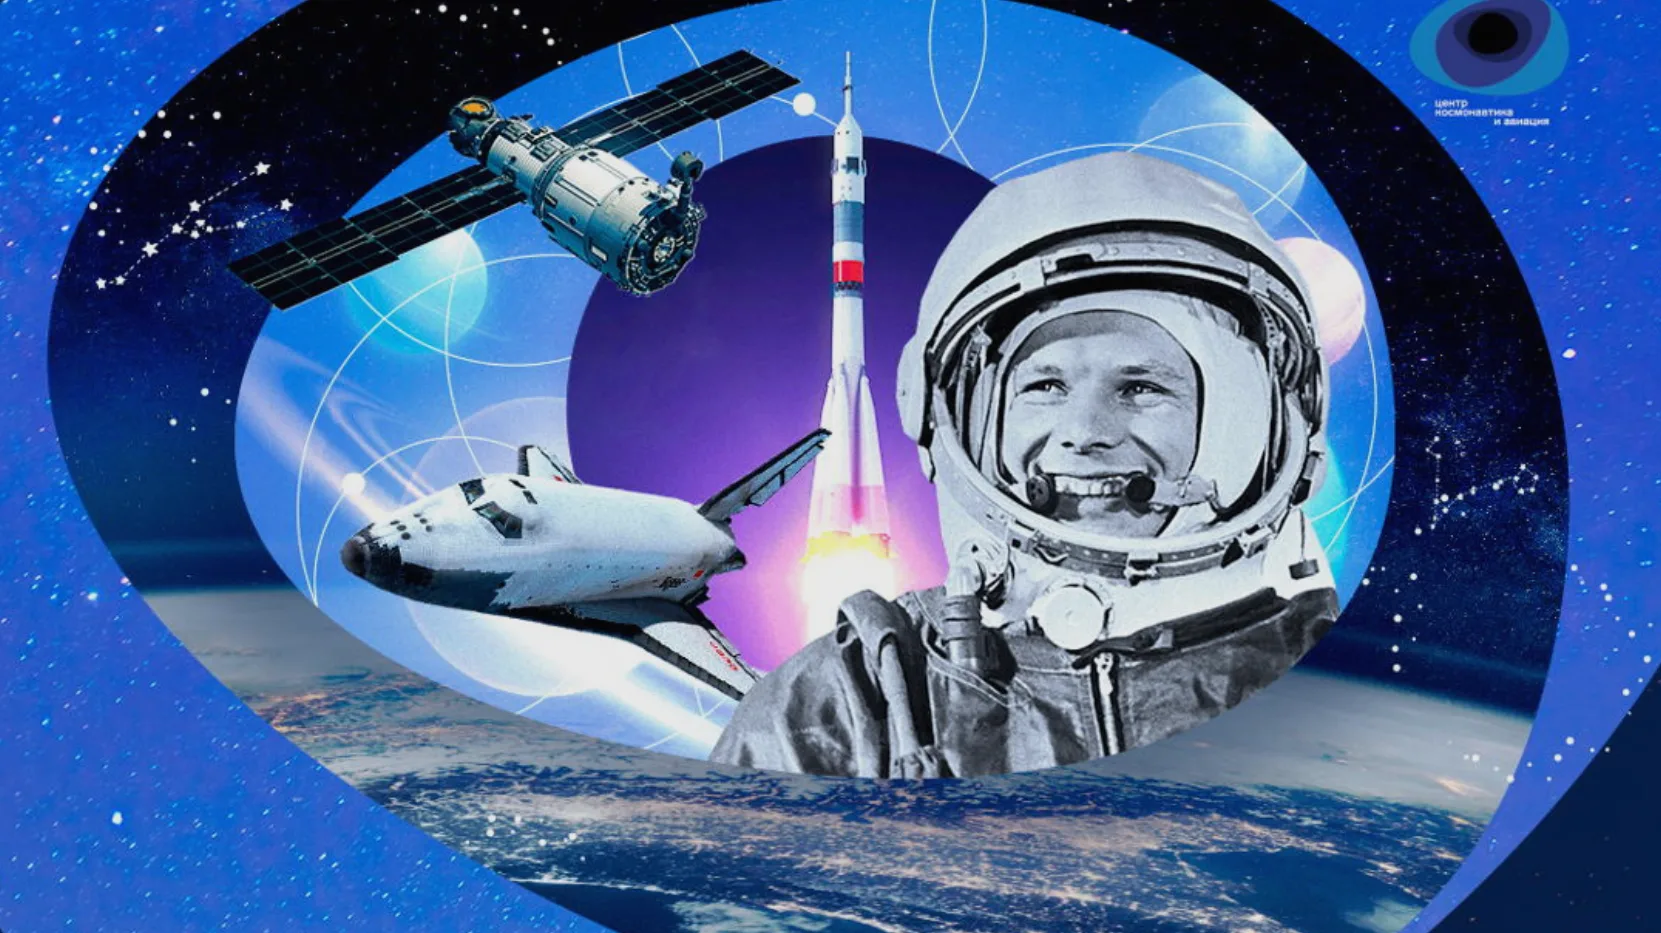 Фотки на день космонавтики. День космонавтики. Космос день космонавтики. 12 Апреля день космонавтики. Международный день авиации и космонавтики.